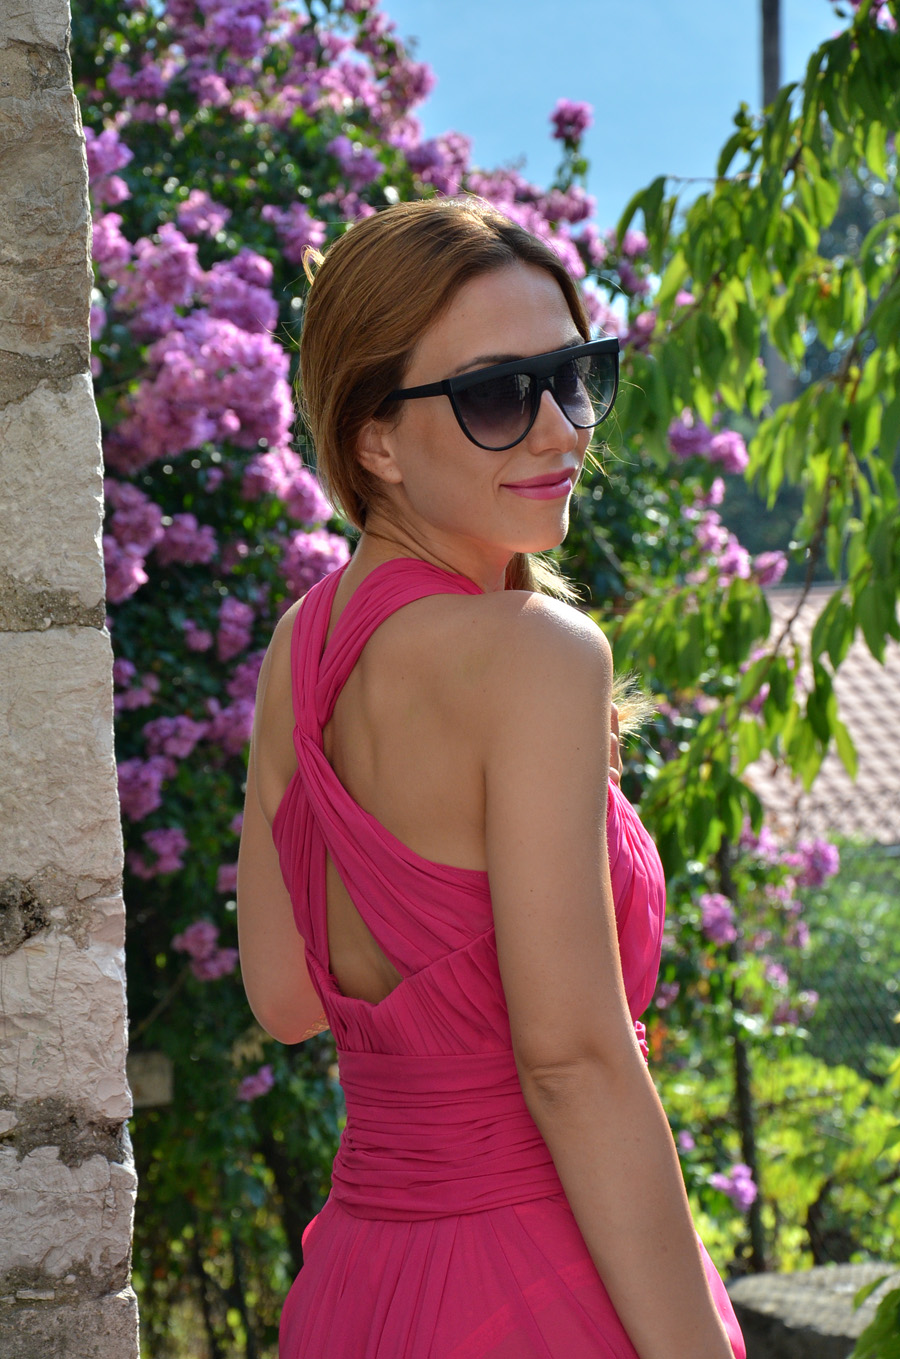 Fuschia pink dress / Stasha Fashion blog by Anastasija